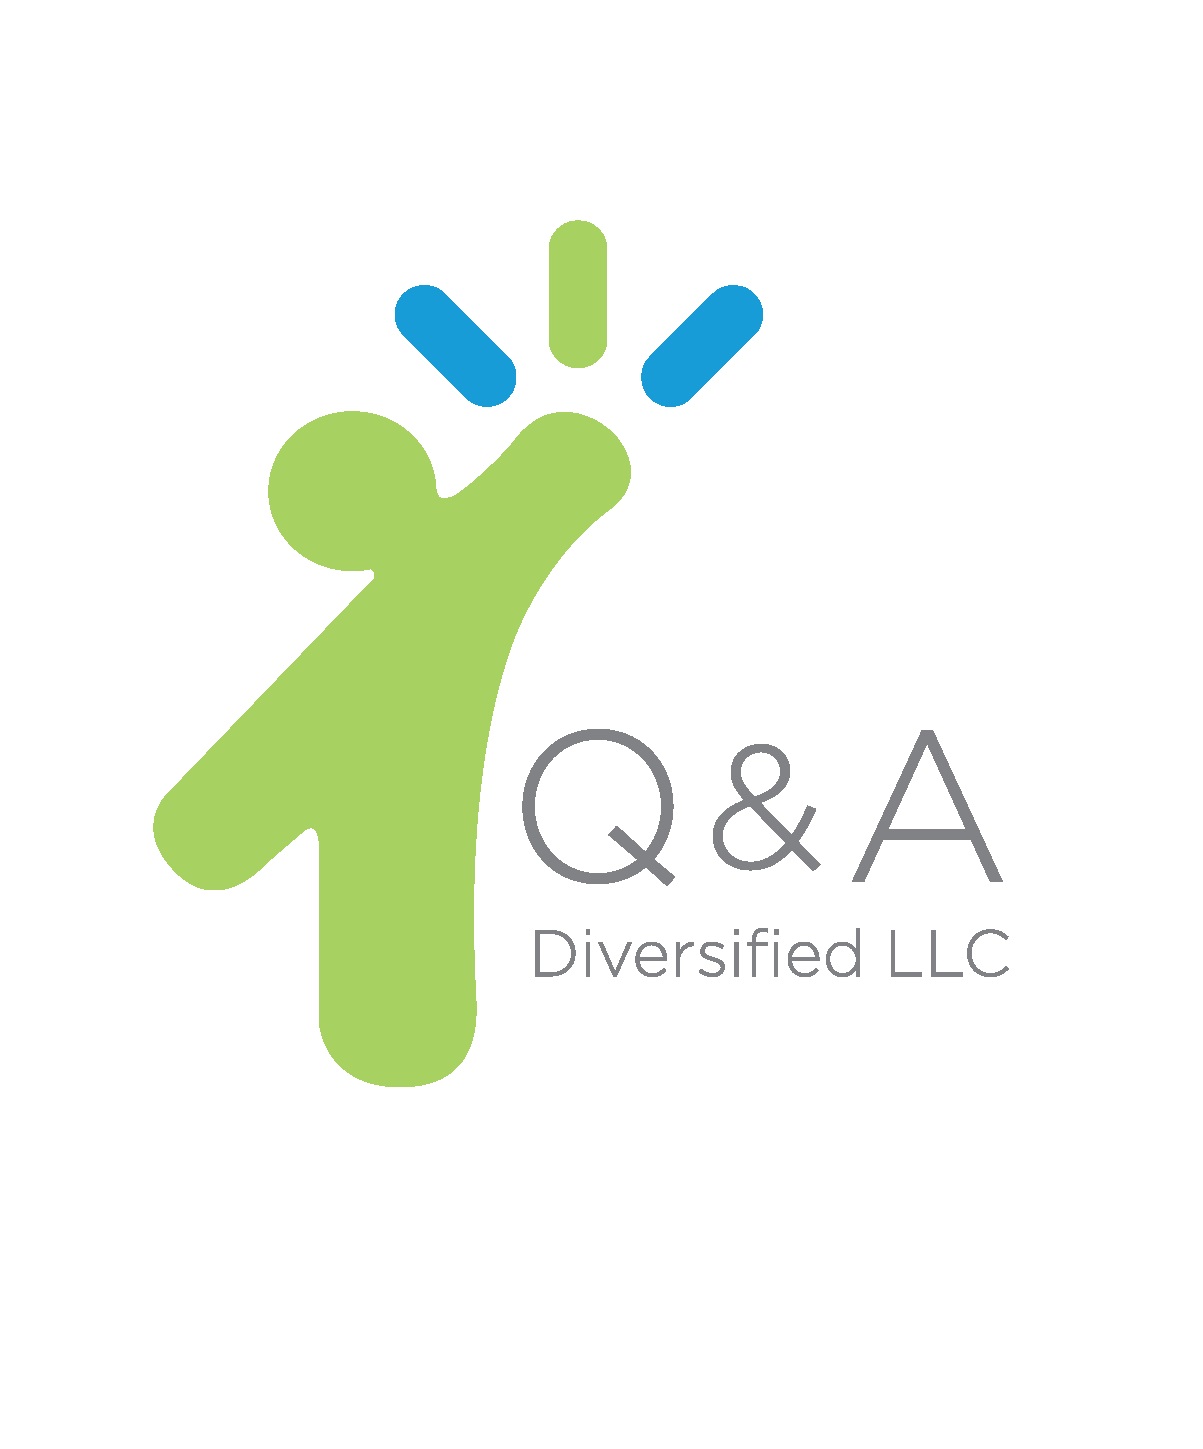 Q&A Diversified, LLC